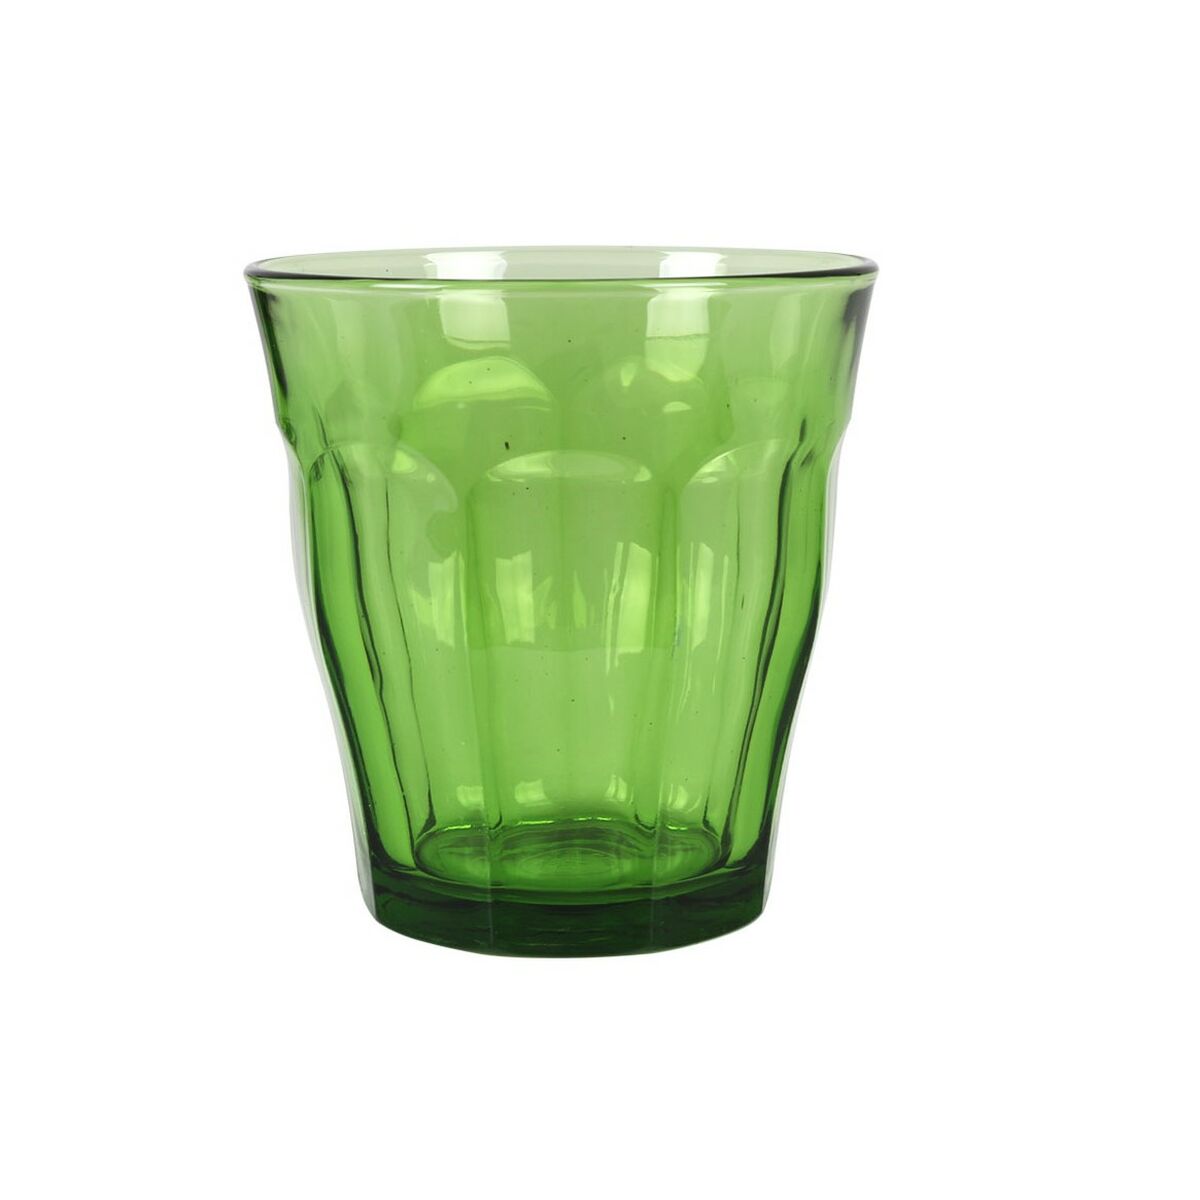 Glazenset Duralex Picardie Groen 310 ml (4 Stuks)